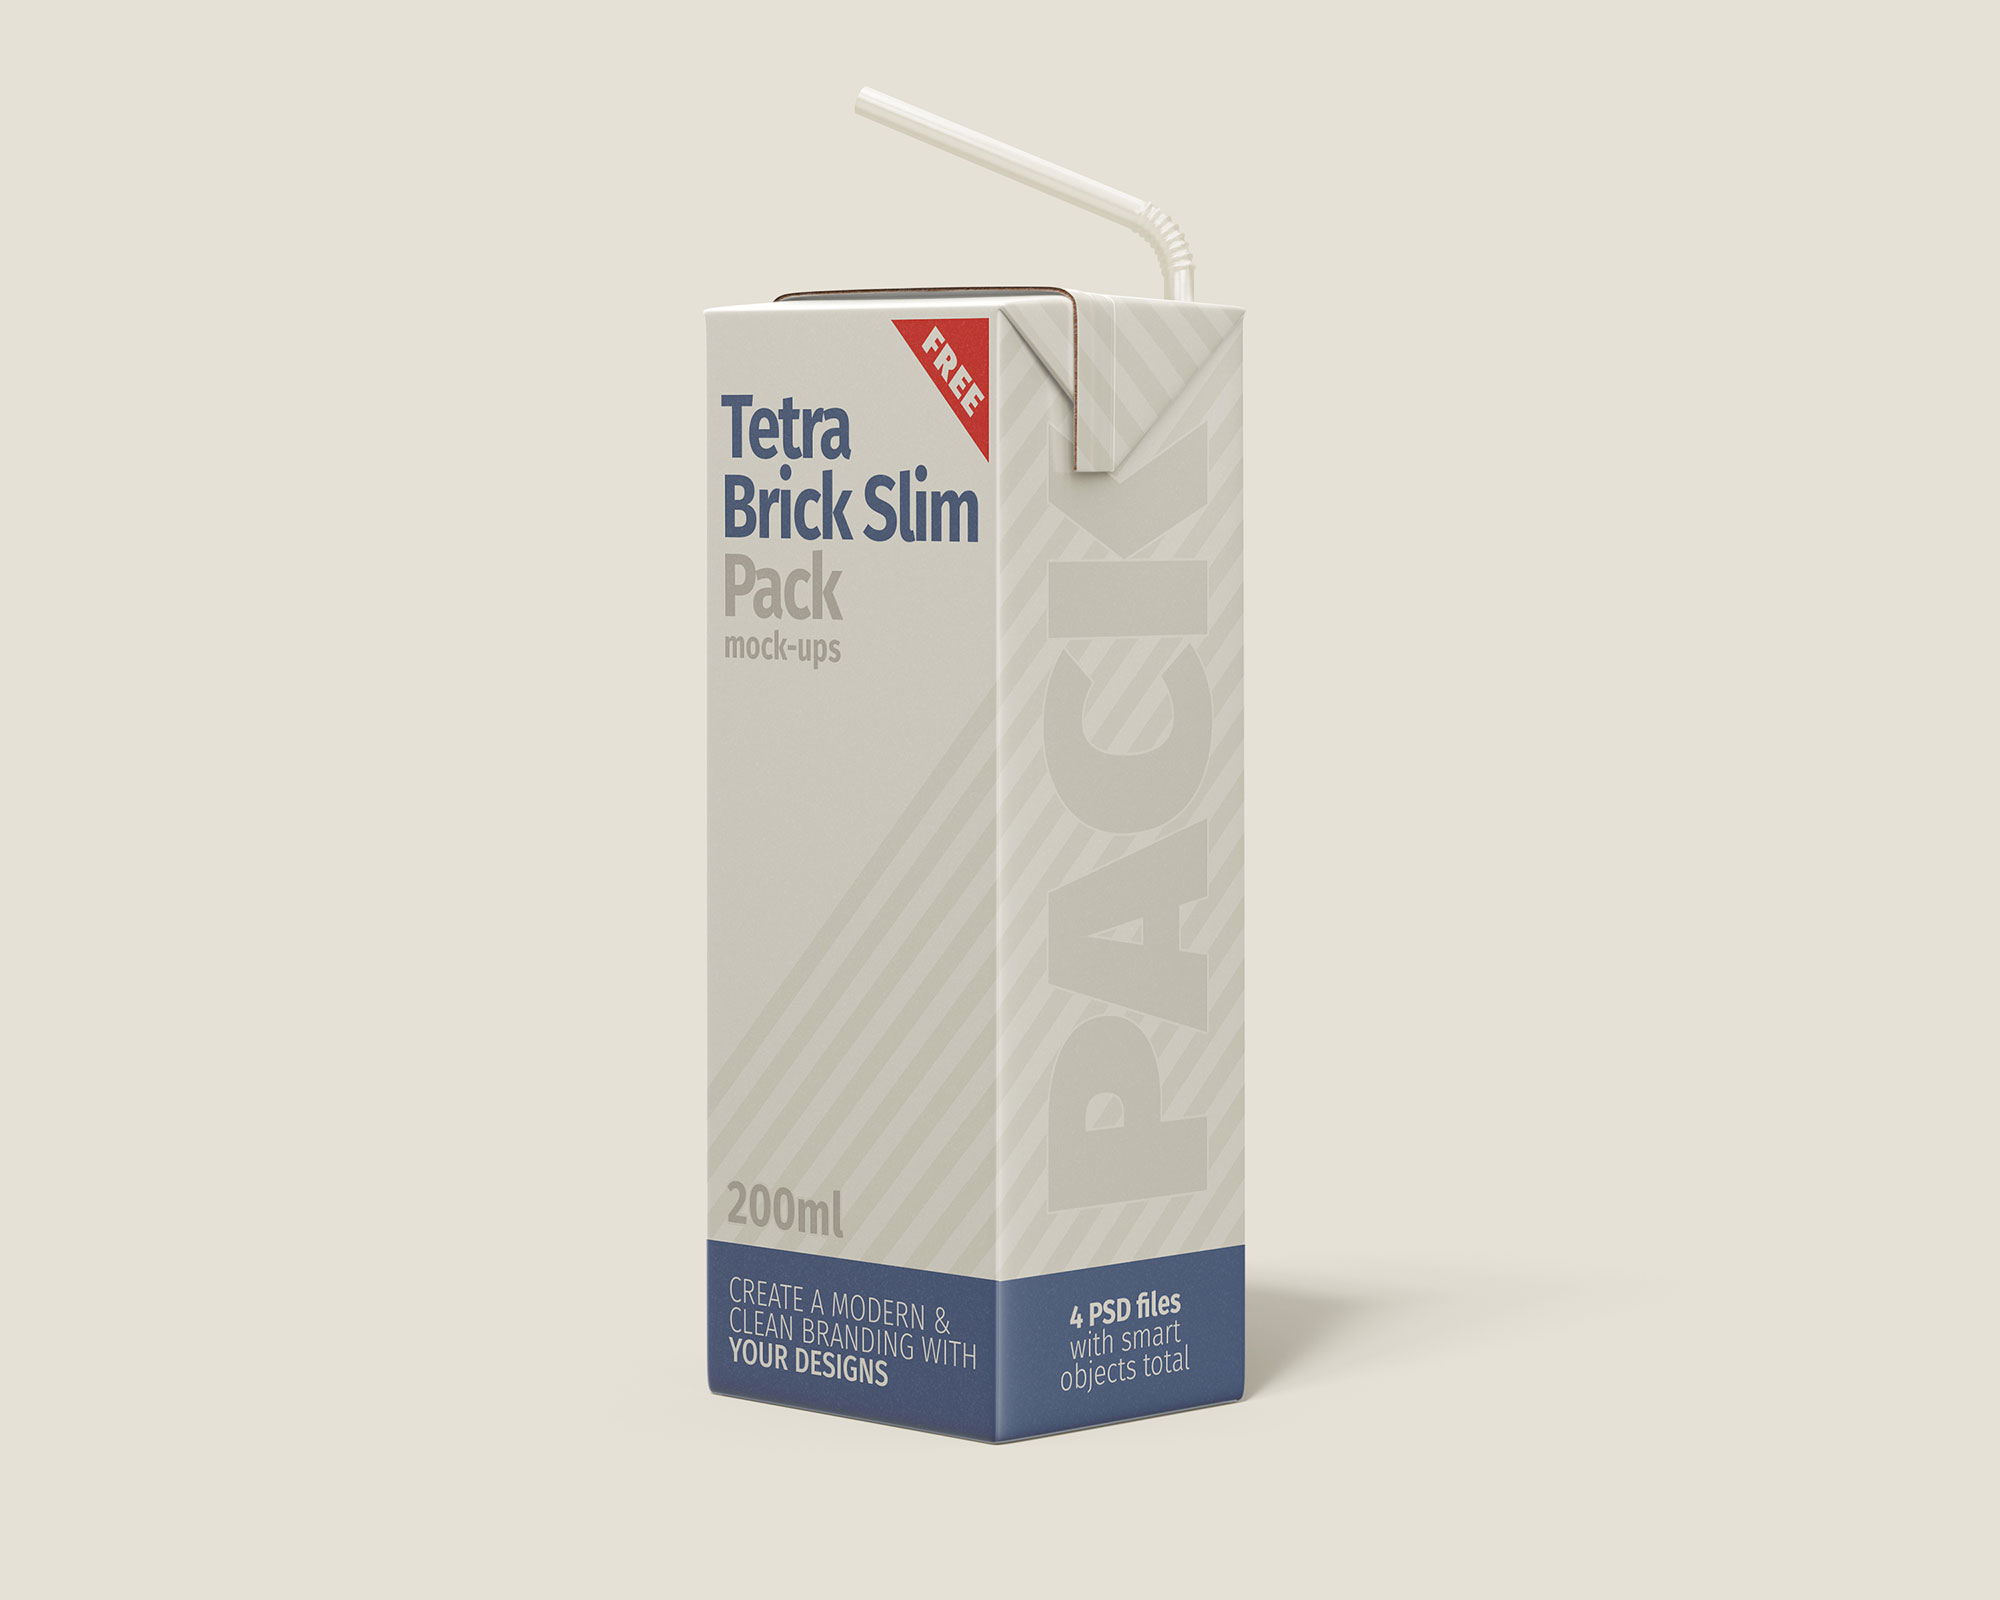 Free-Juice-Milk-Tetra-Brick-Slim-200-ml-Mockup-PSD-Set